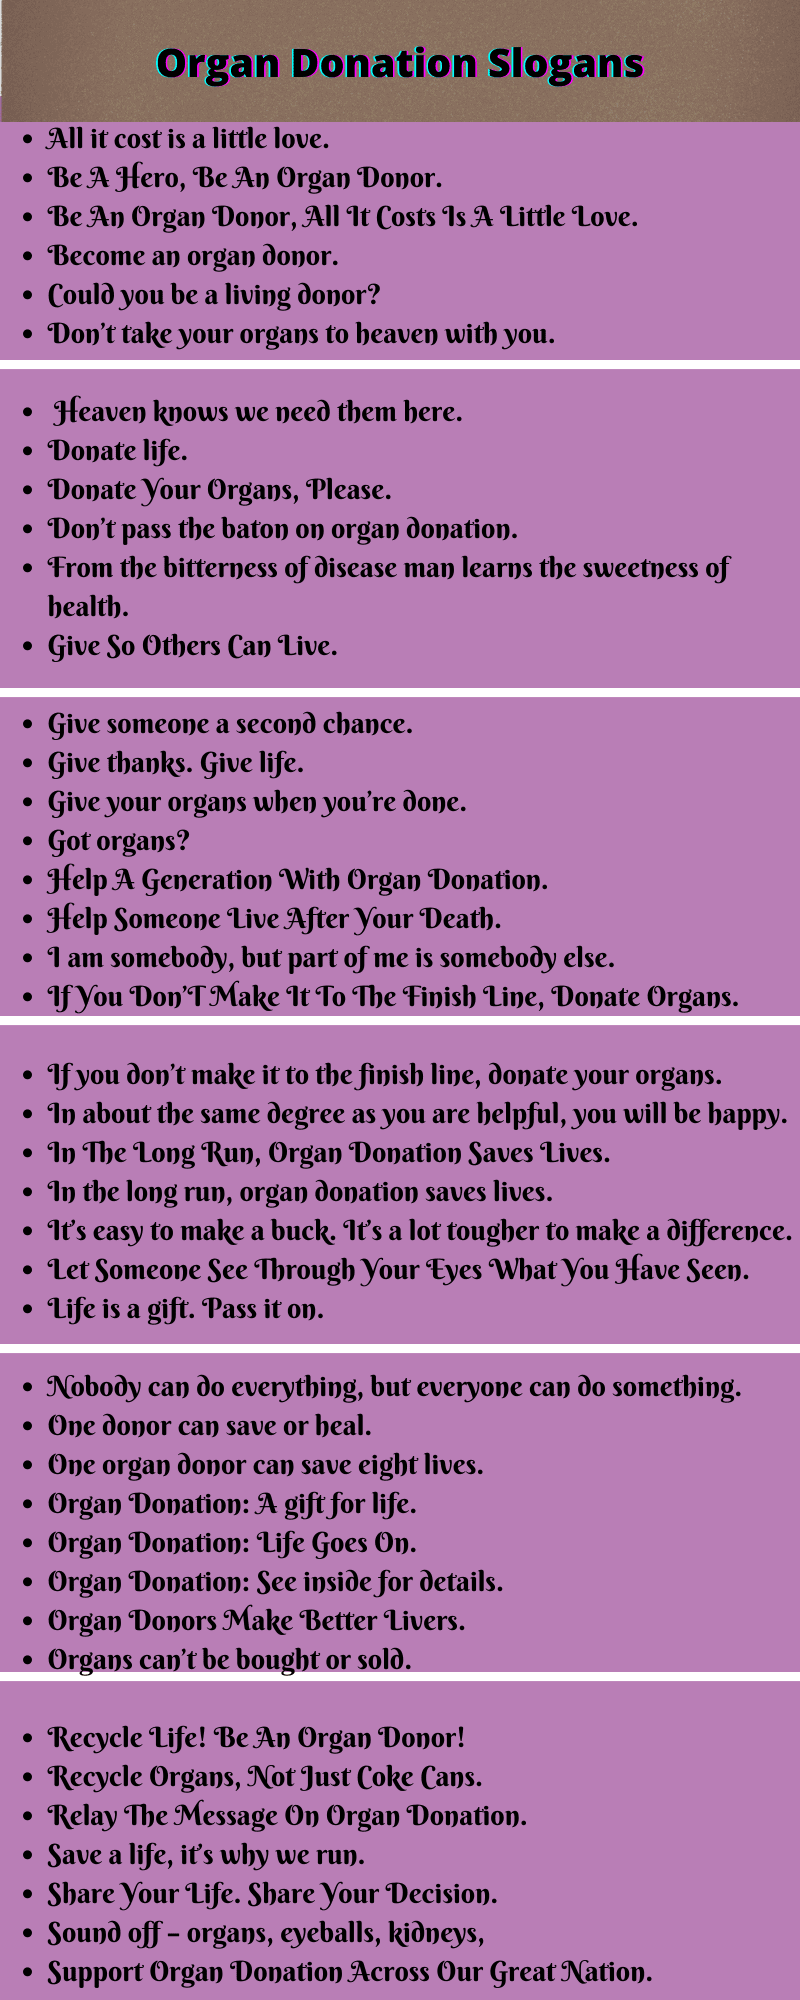 Organ Donation Slogans: 200+ Catchy Organ Donation Slogans